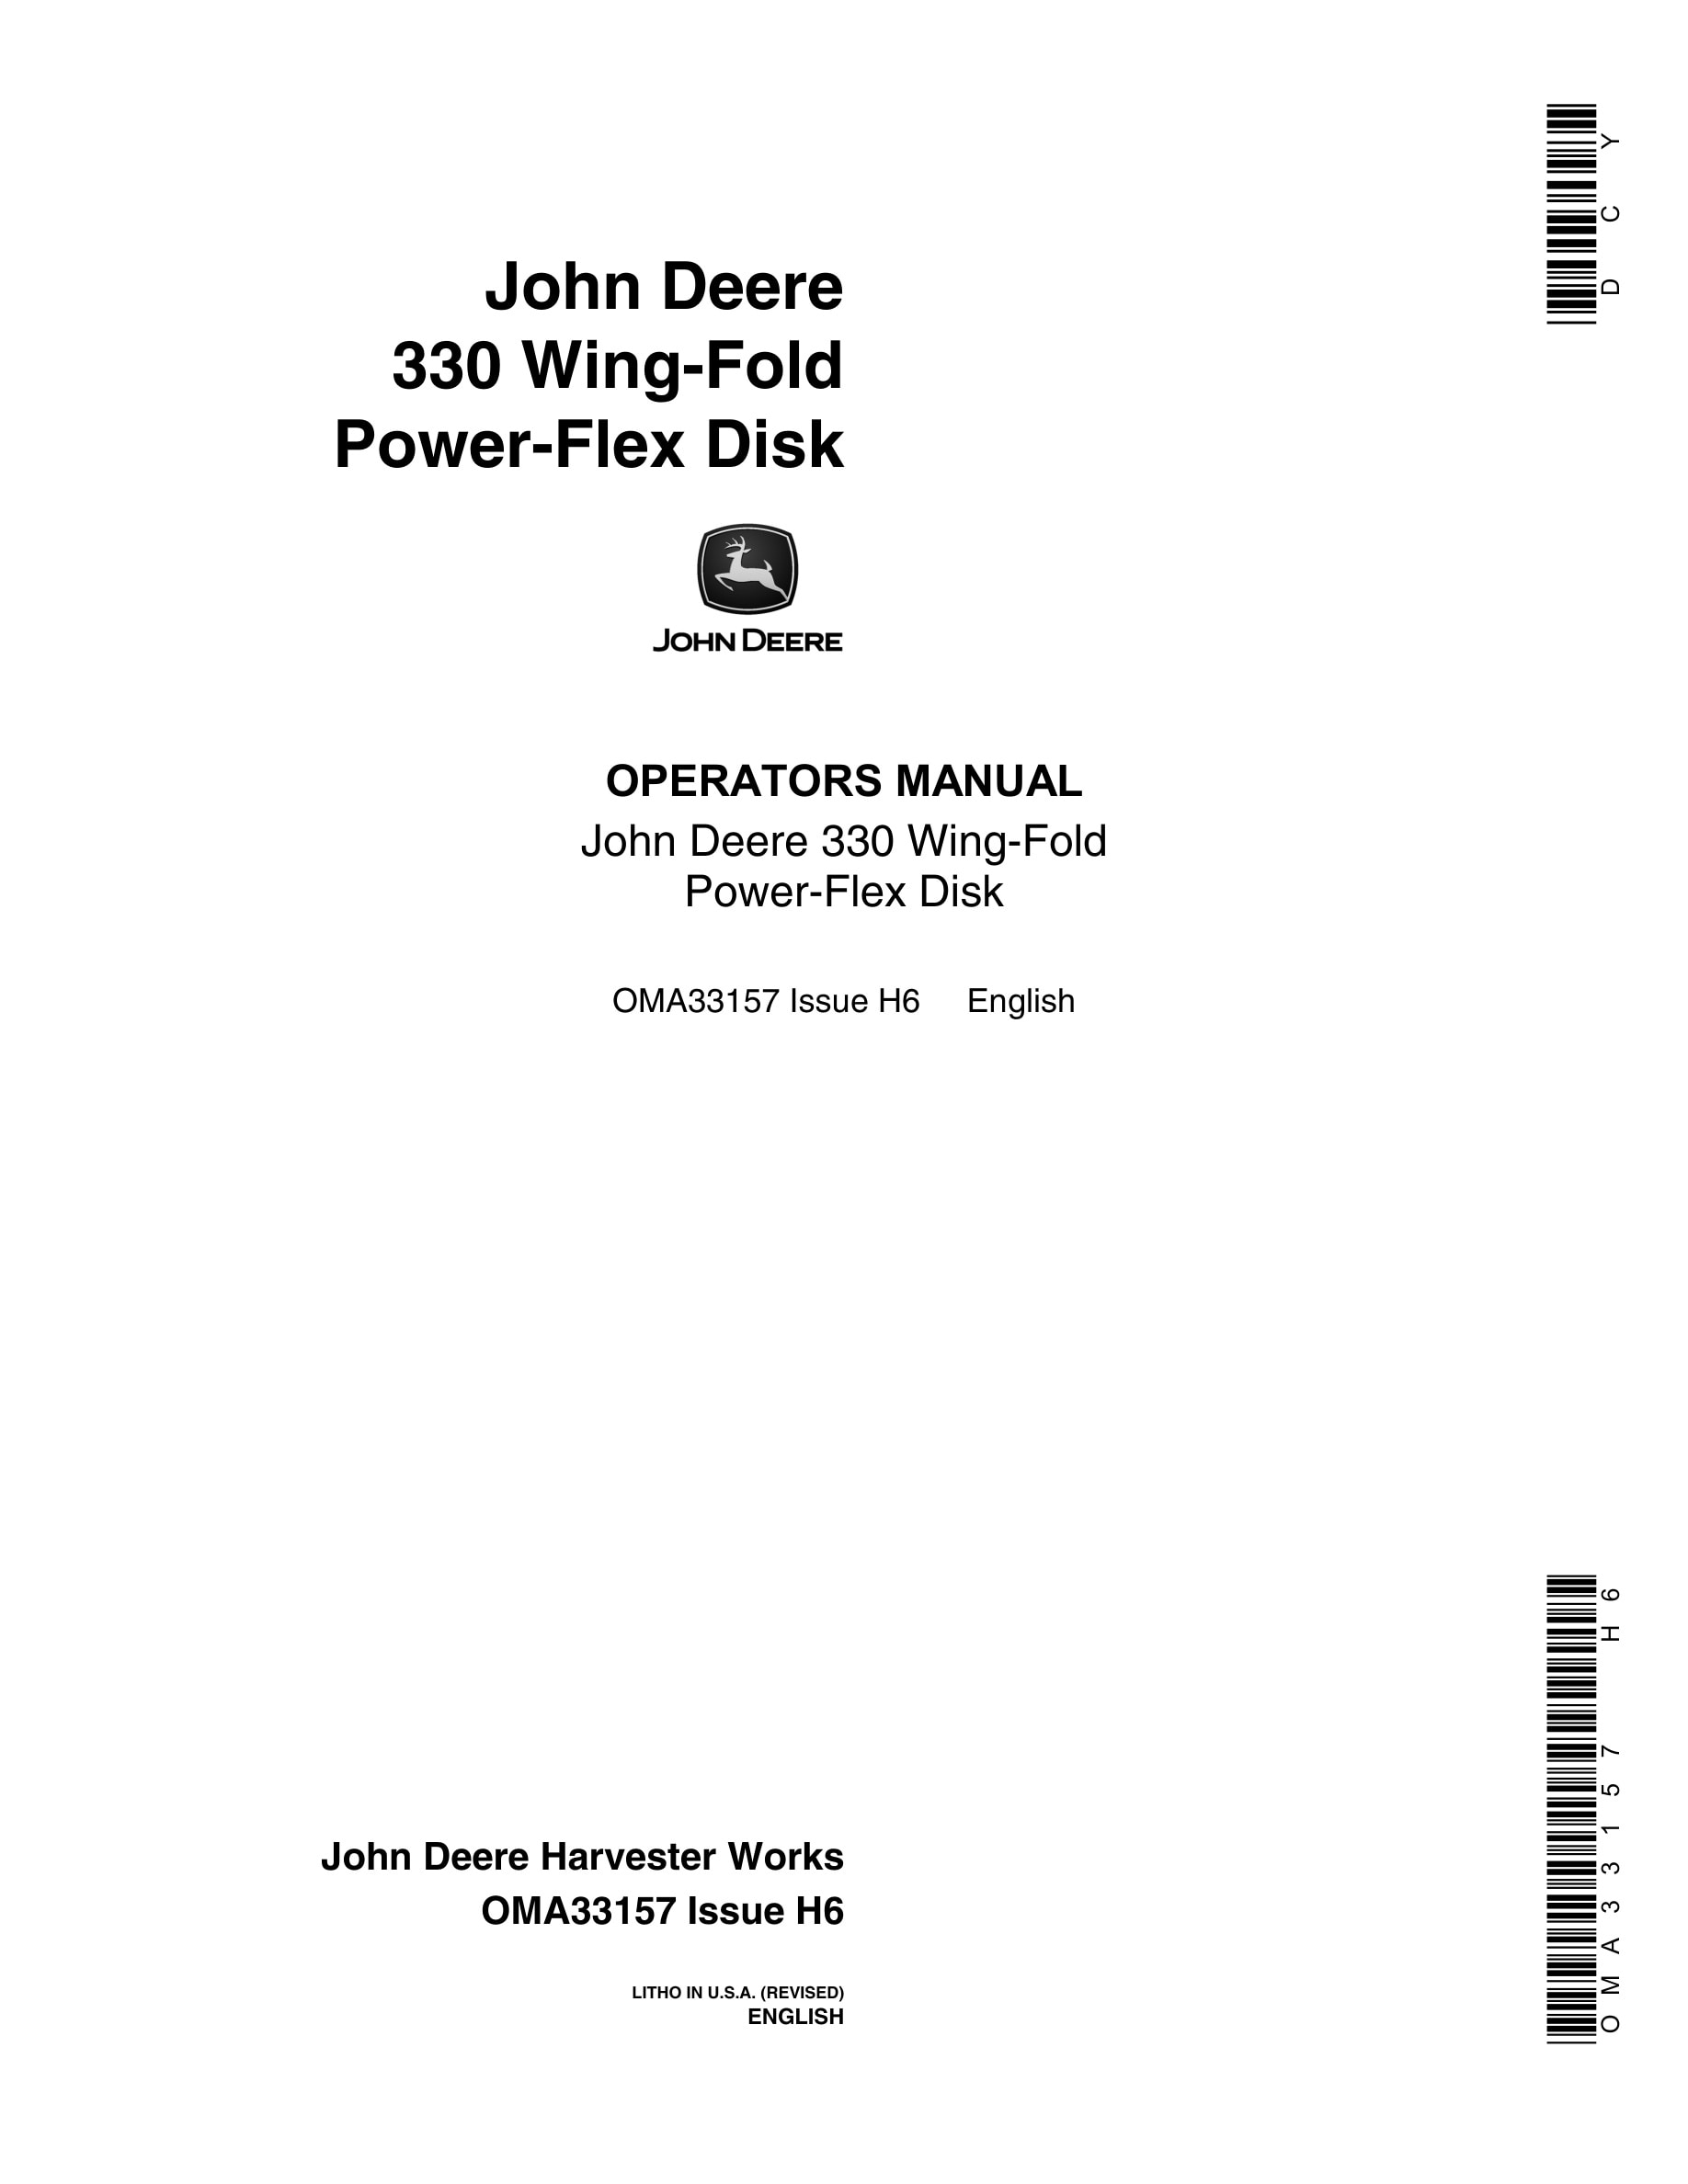 John Deere 330 Wing-Fold Power-Flex Disk Operator Manual OMA33157-1